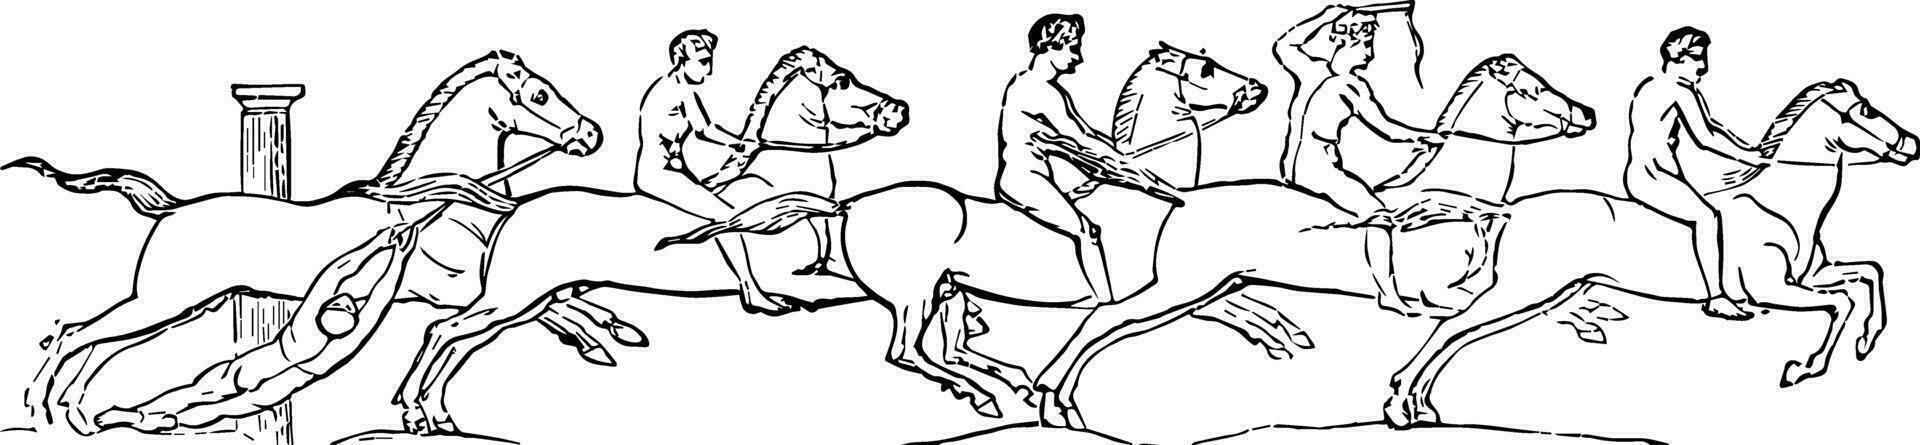 Horse-race, vintage illustration. vector